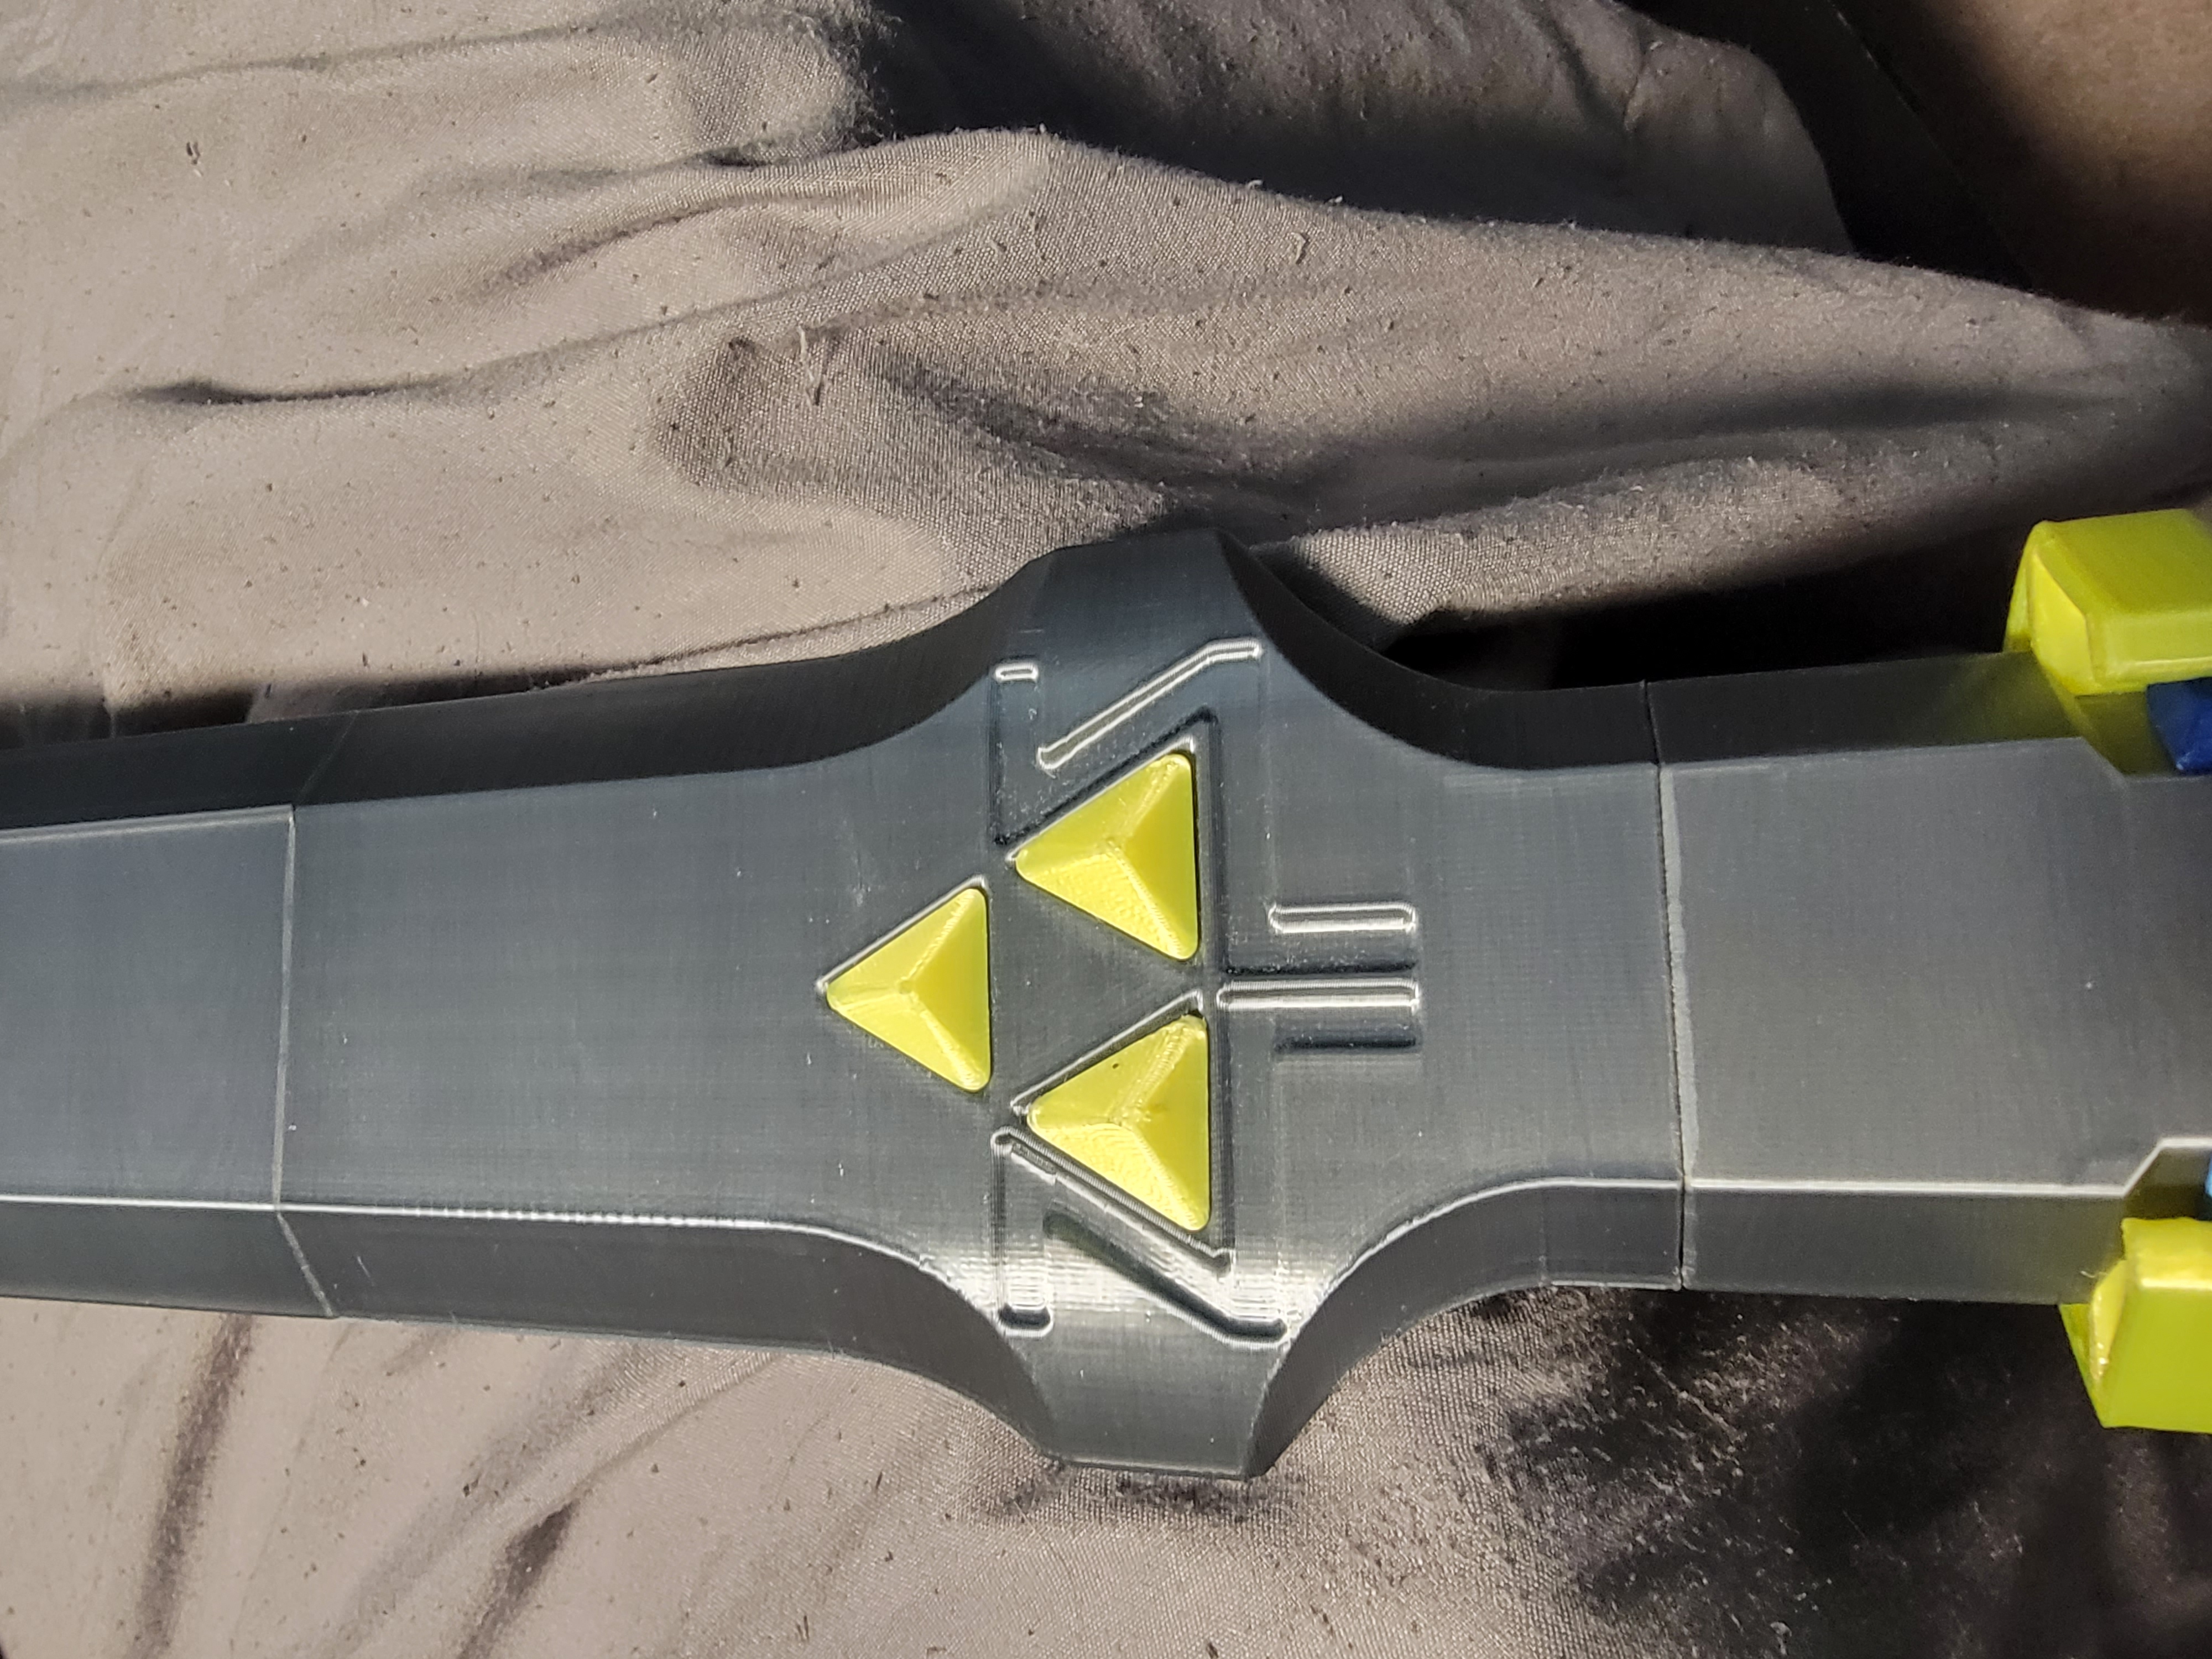 Legend of Zelda Master Sword (BOTW) (Full Scale) triforce insert